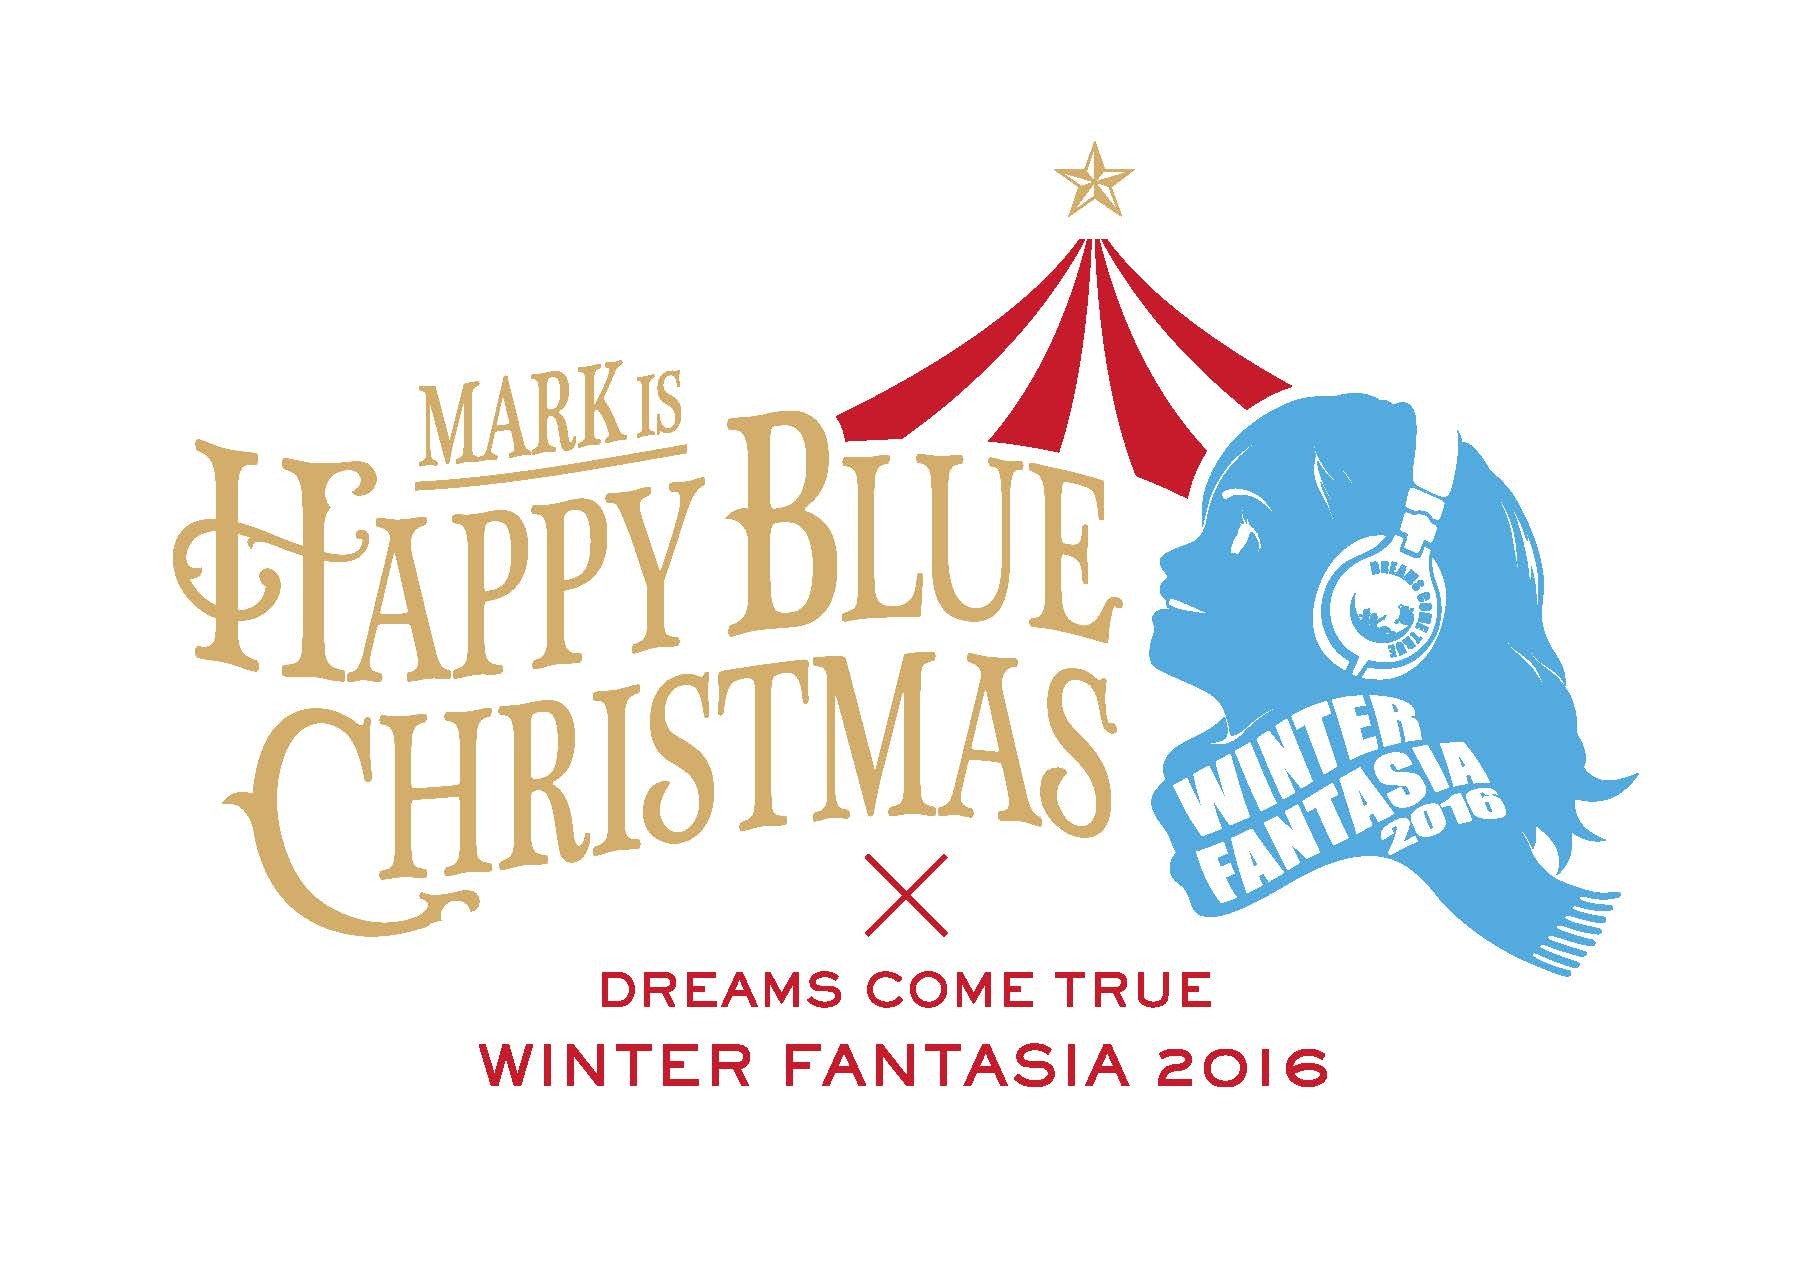 Mark Is Happy Blue Christmas Dreams Come True Winter Fantasia 16 三菱地所リテールマネジメント株式会社のプレスリリース